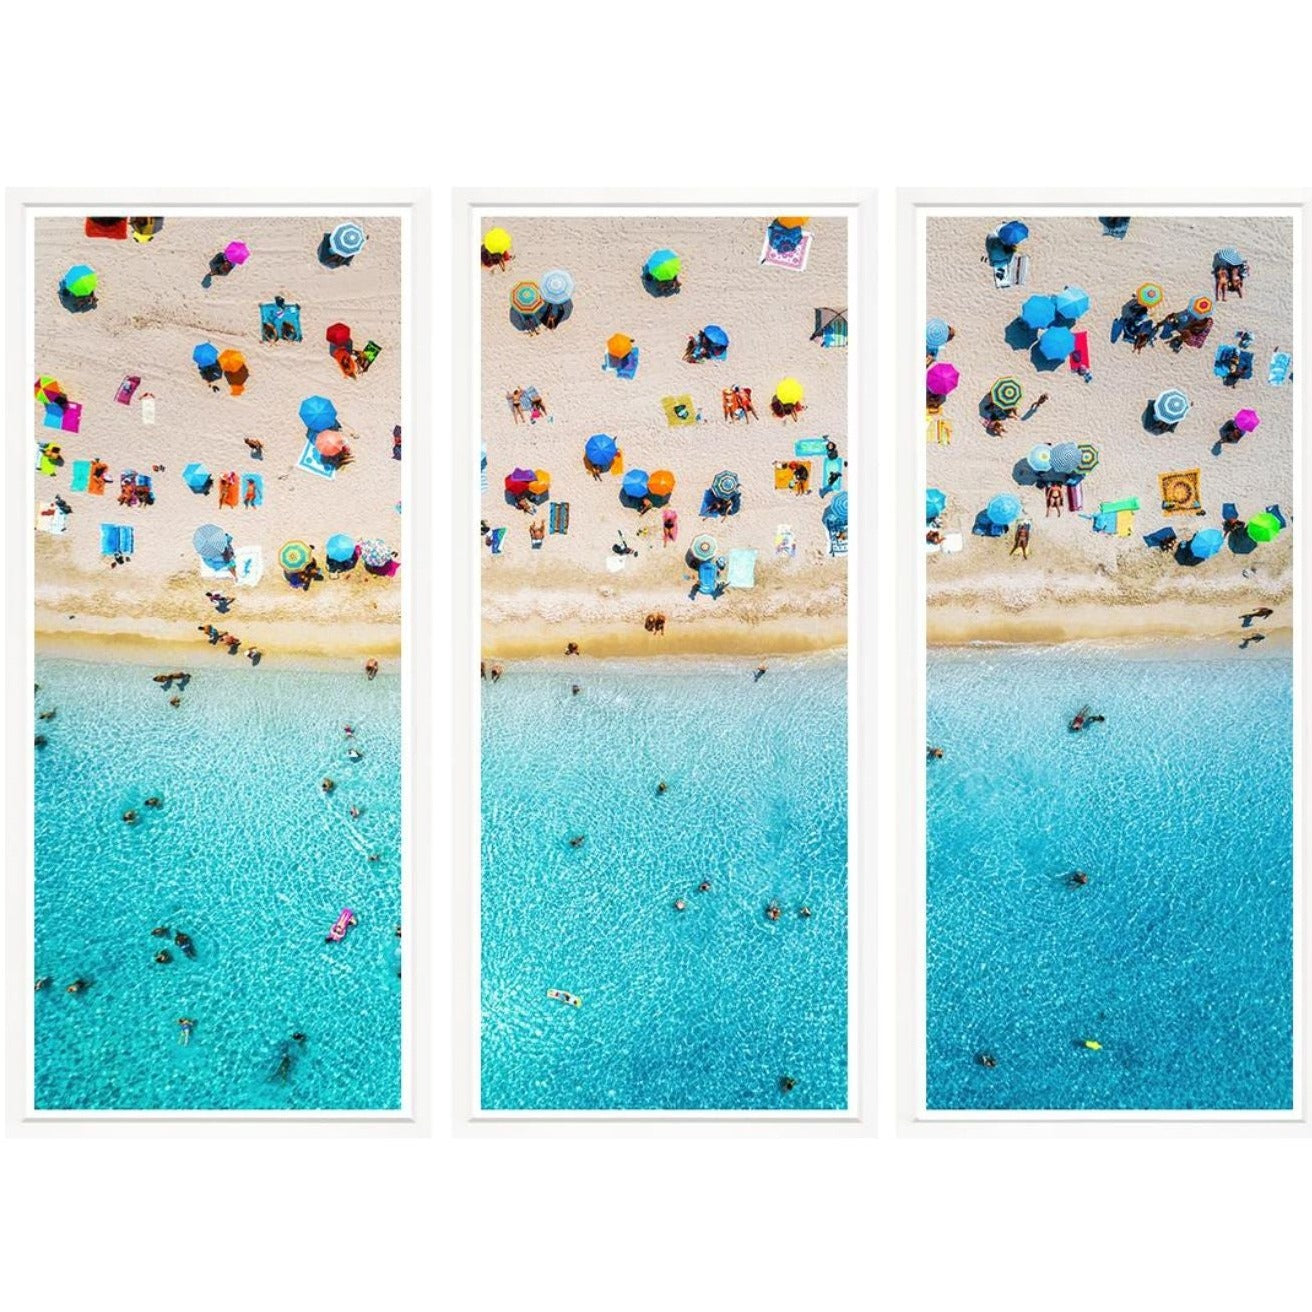 3 separate aerial arts of beach and sunbathers at ocean edge.e